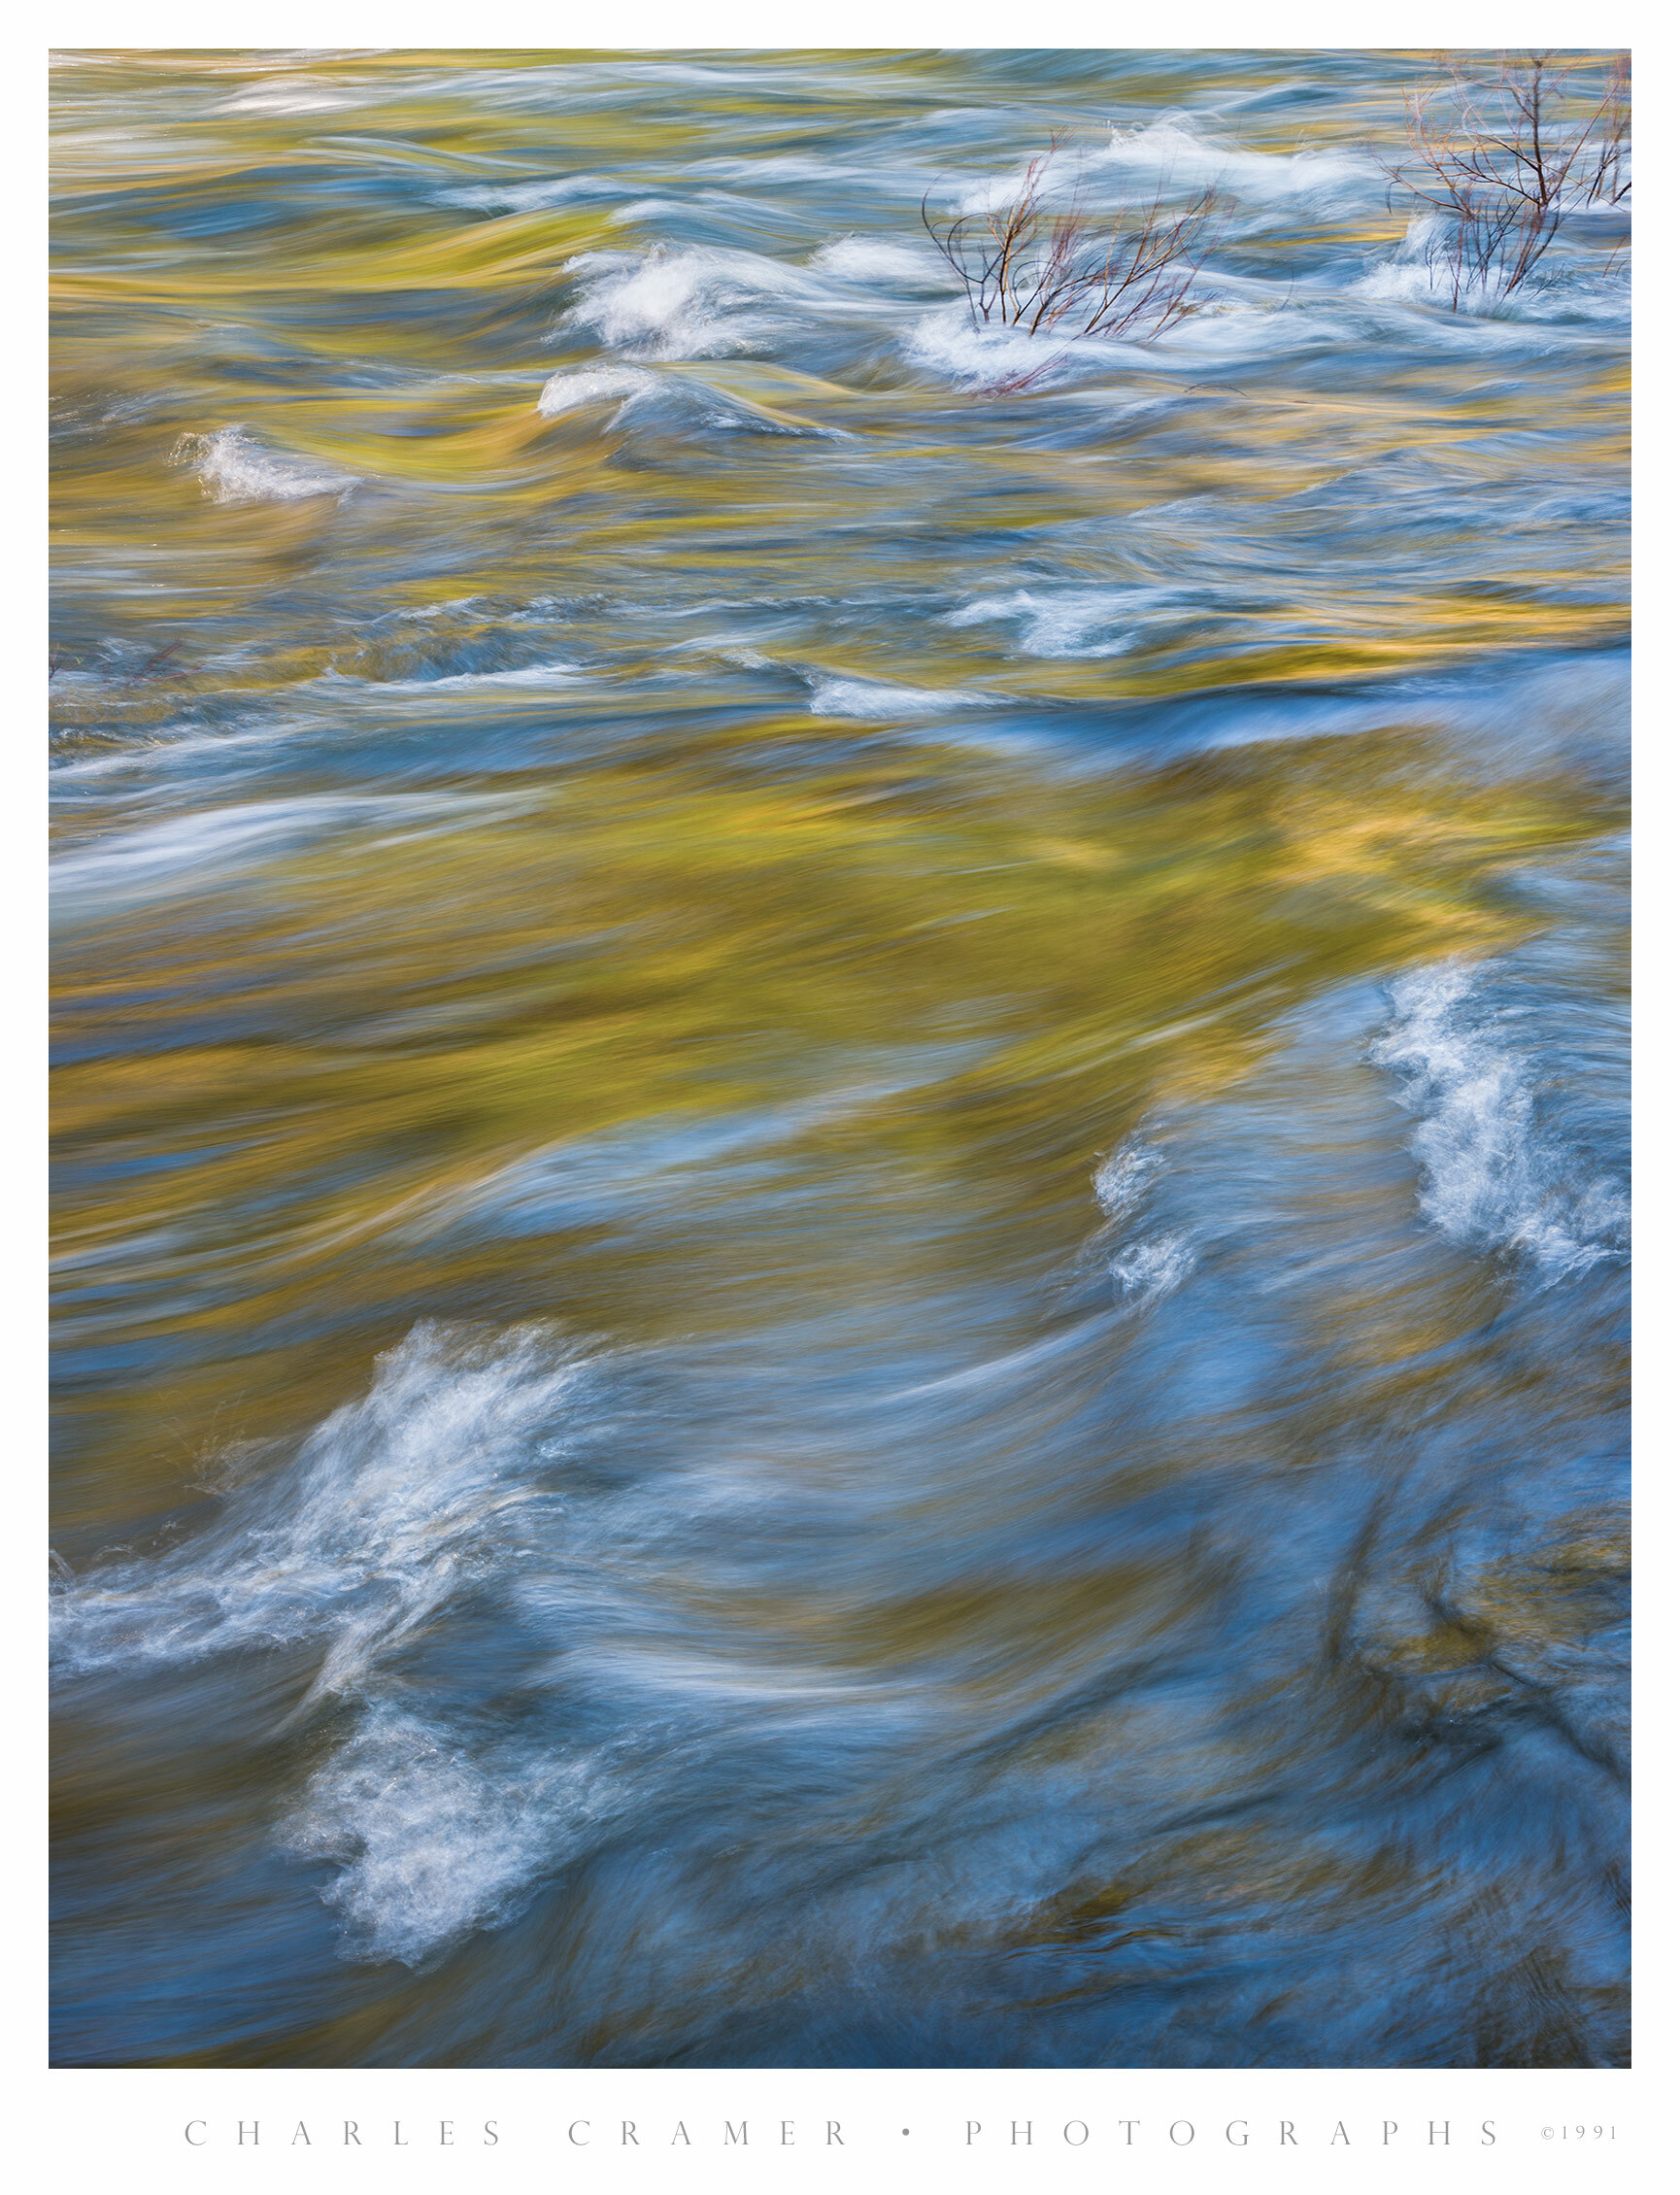 Shrubs in Spring Flow, Merced River, Yosemite